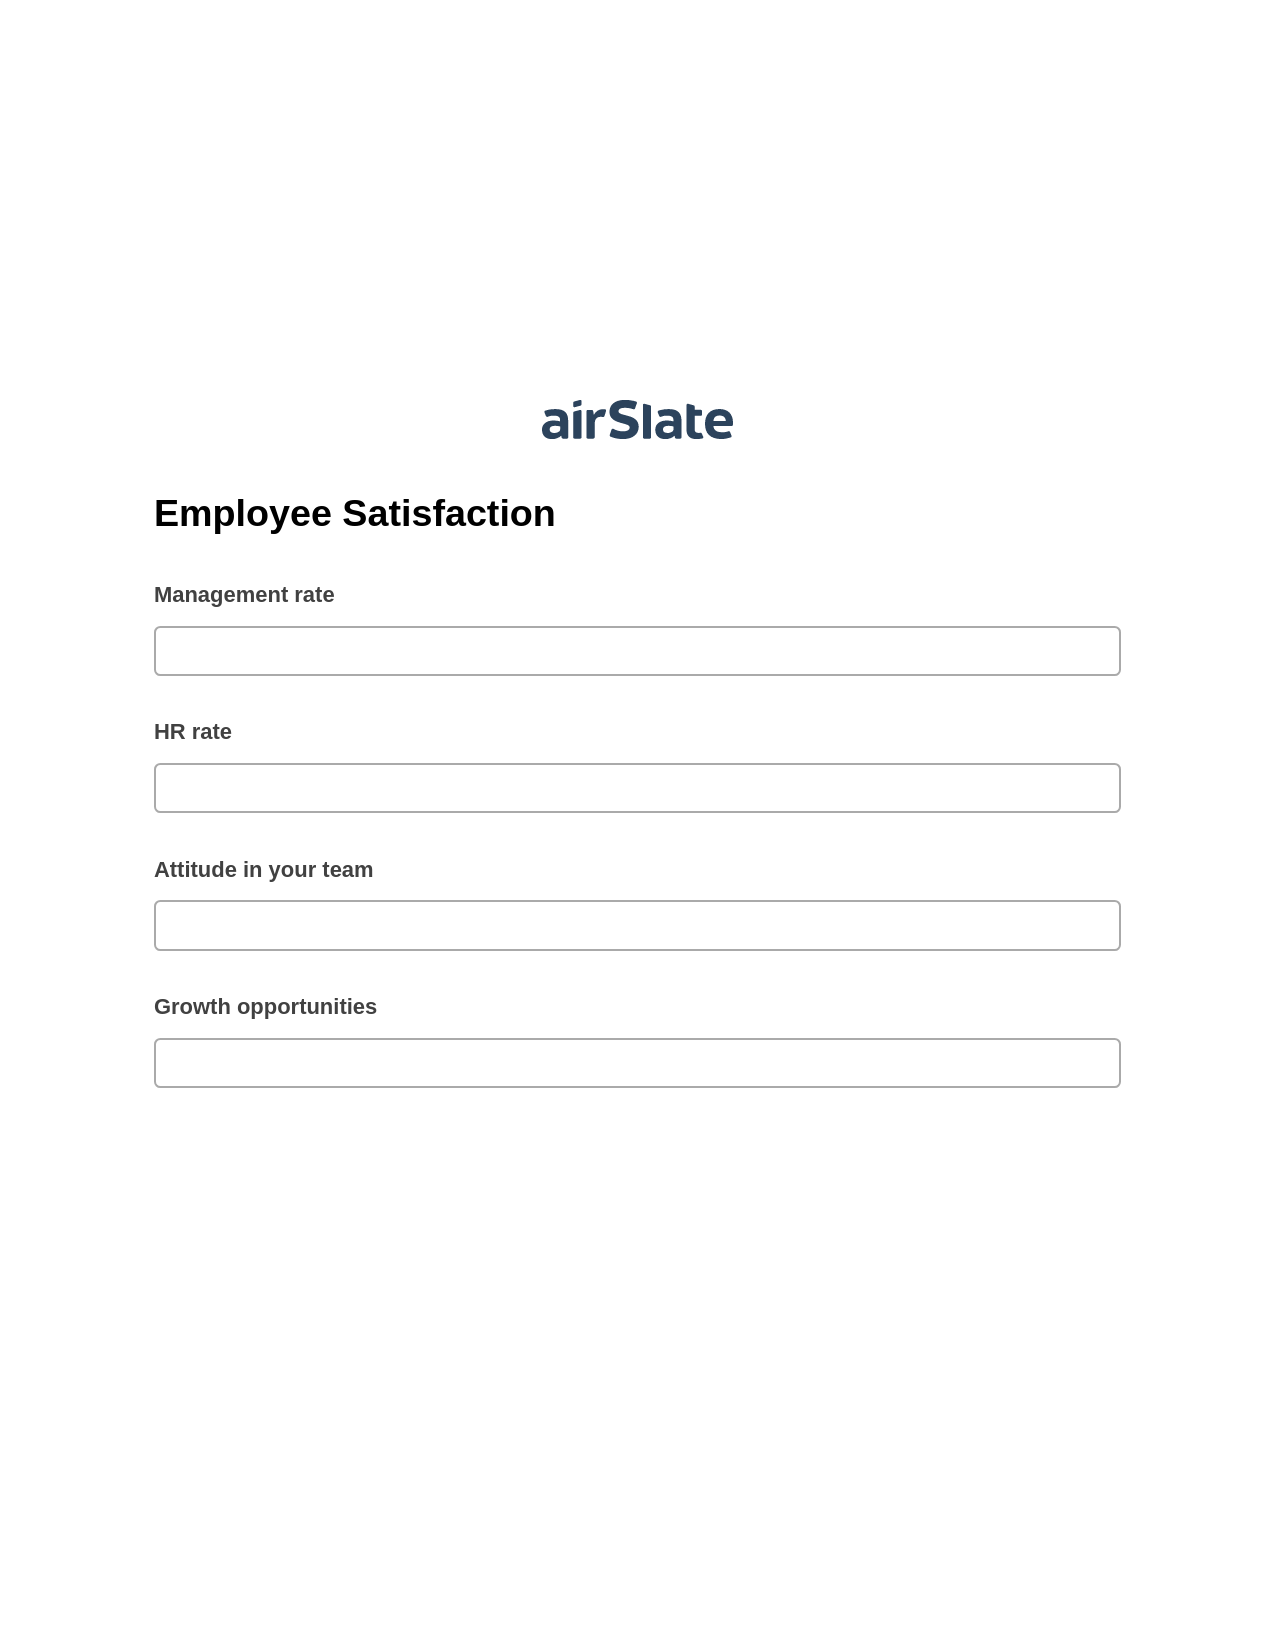 Employee Satisfaction Pre-fill from MySQL Bot, Create Slate Reminder Bot, Export to Smartsheet